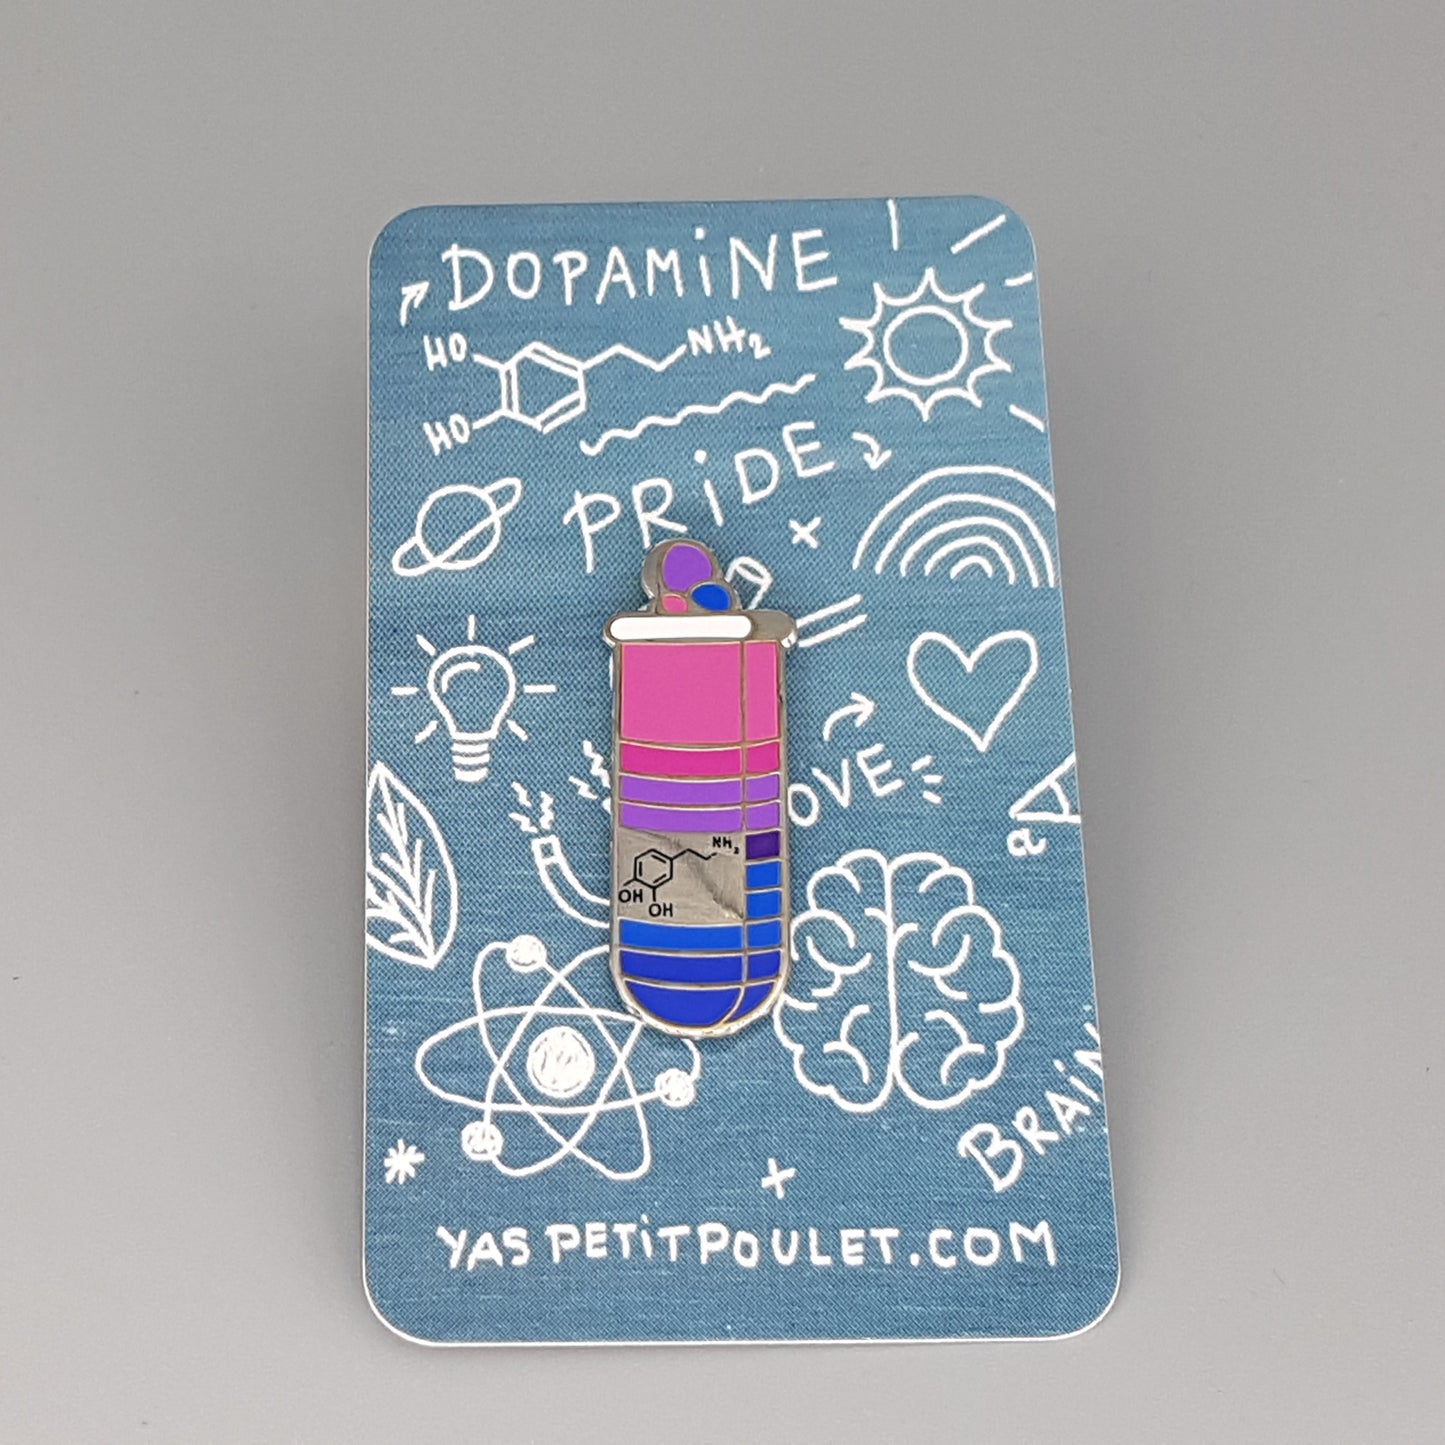 Dopamine bisexuelle | Insigne en émail